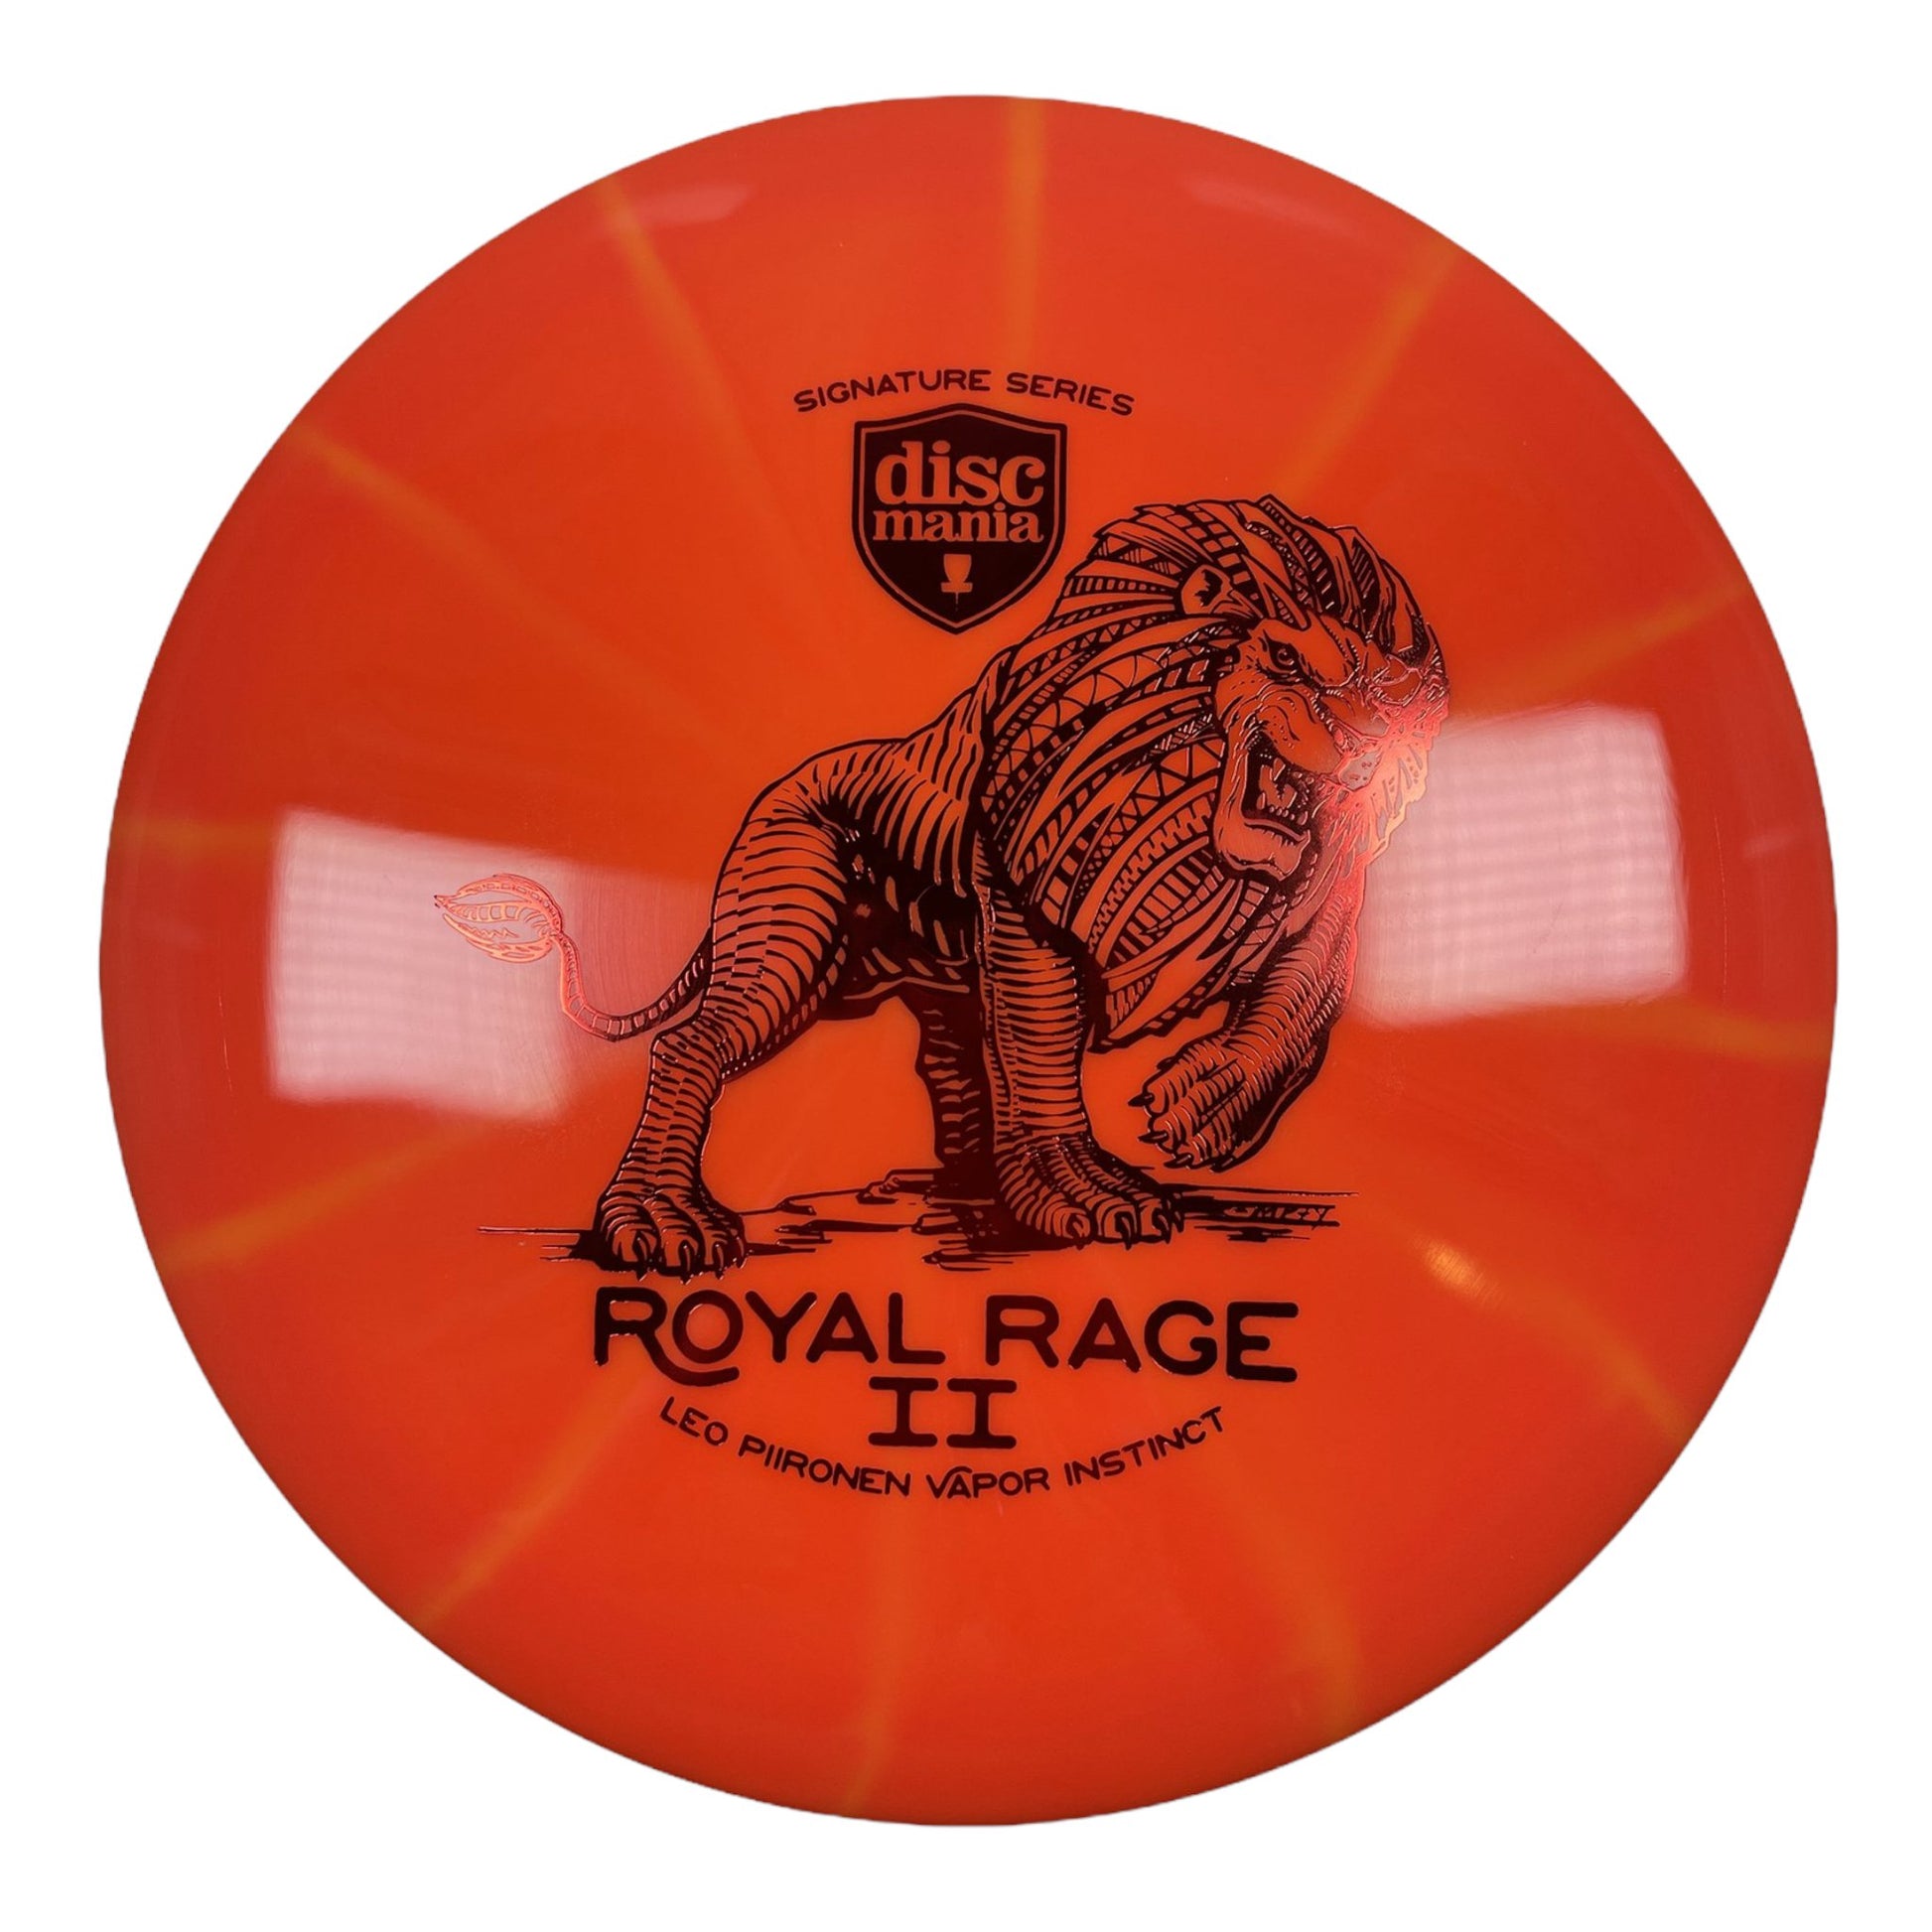 Discmania Royal Rage 2 - Instinct | Lux Vapor | Orange/Red 174-176g (Leo Piironen) Disc Golf